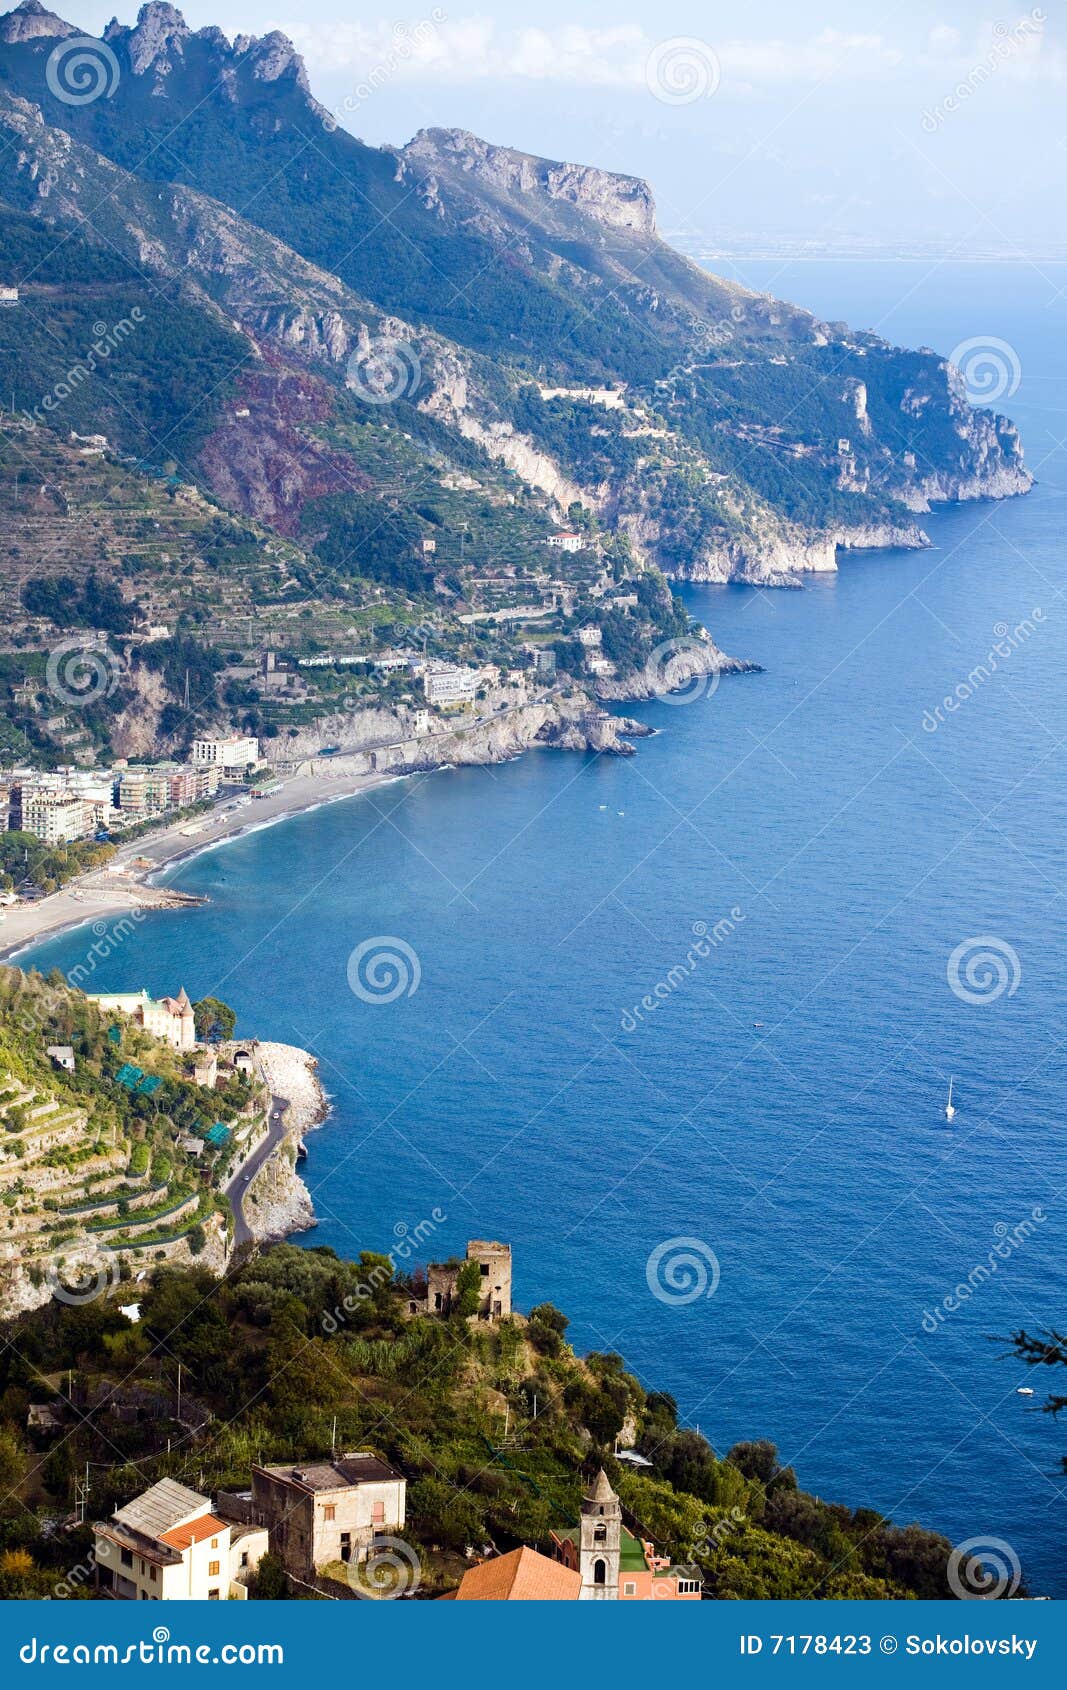 beautiful steep village of the costiera amalfitana